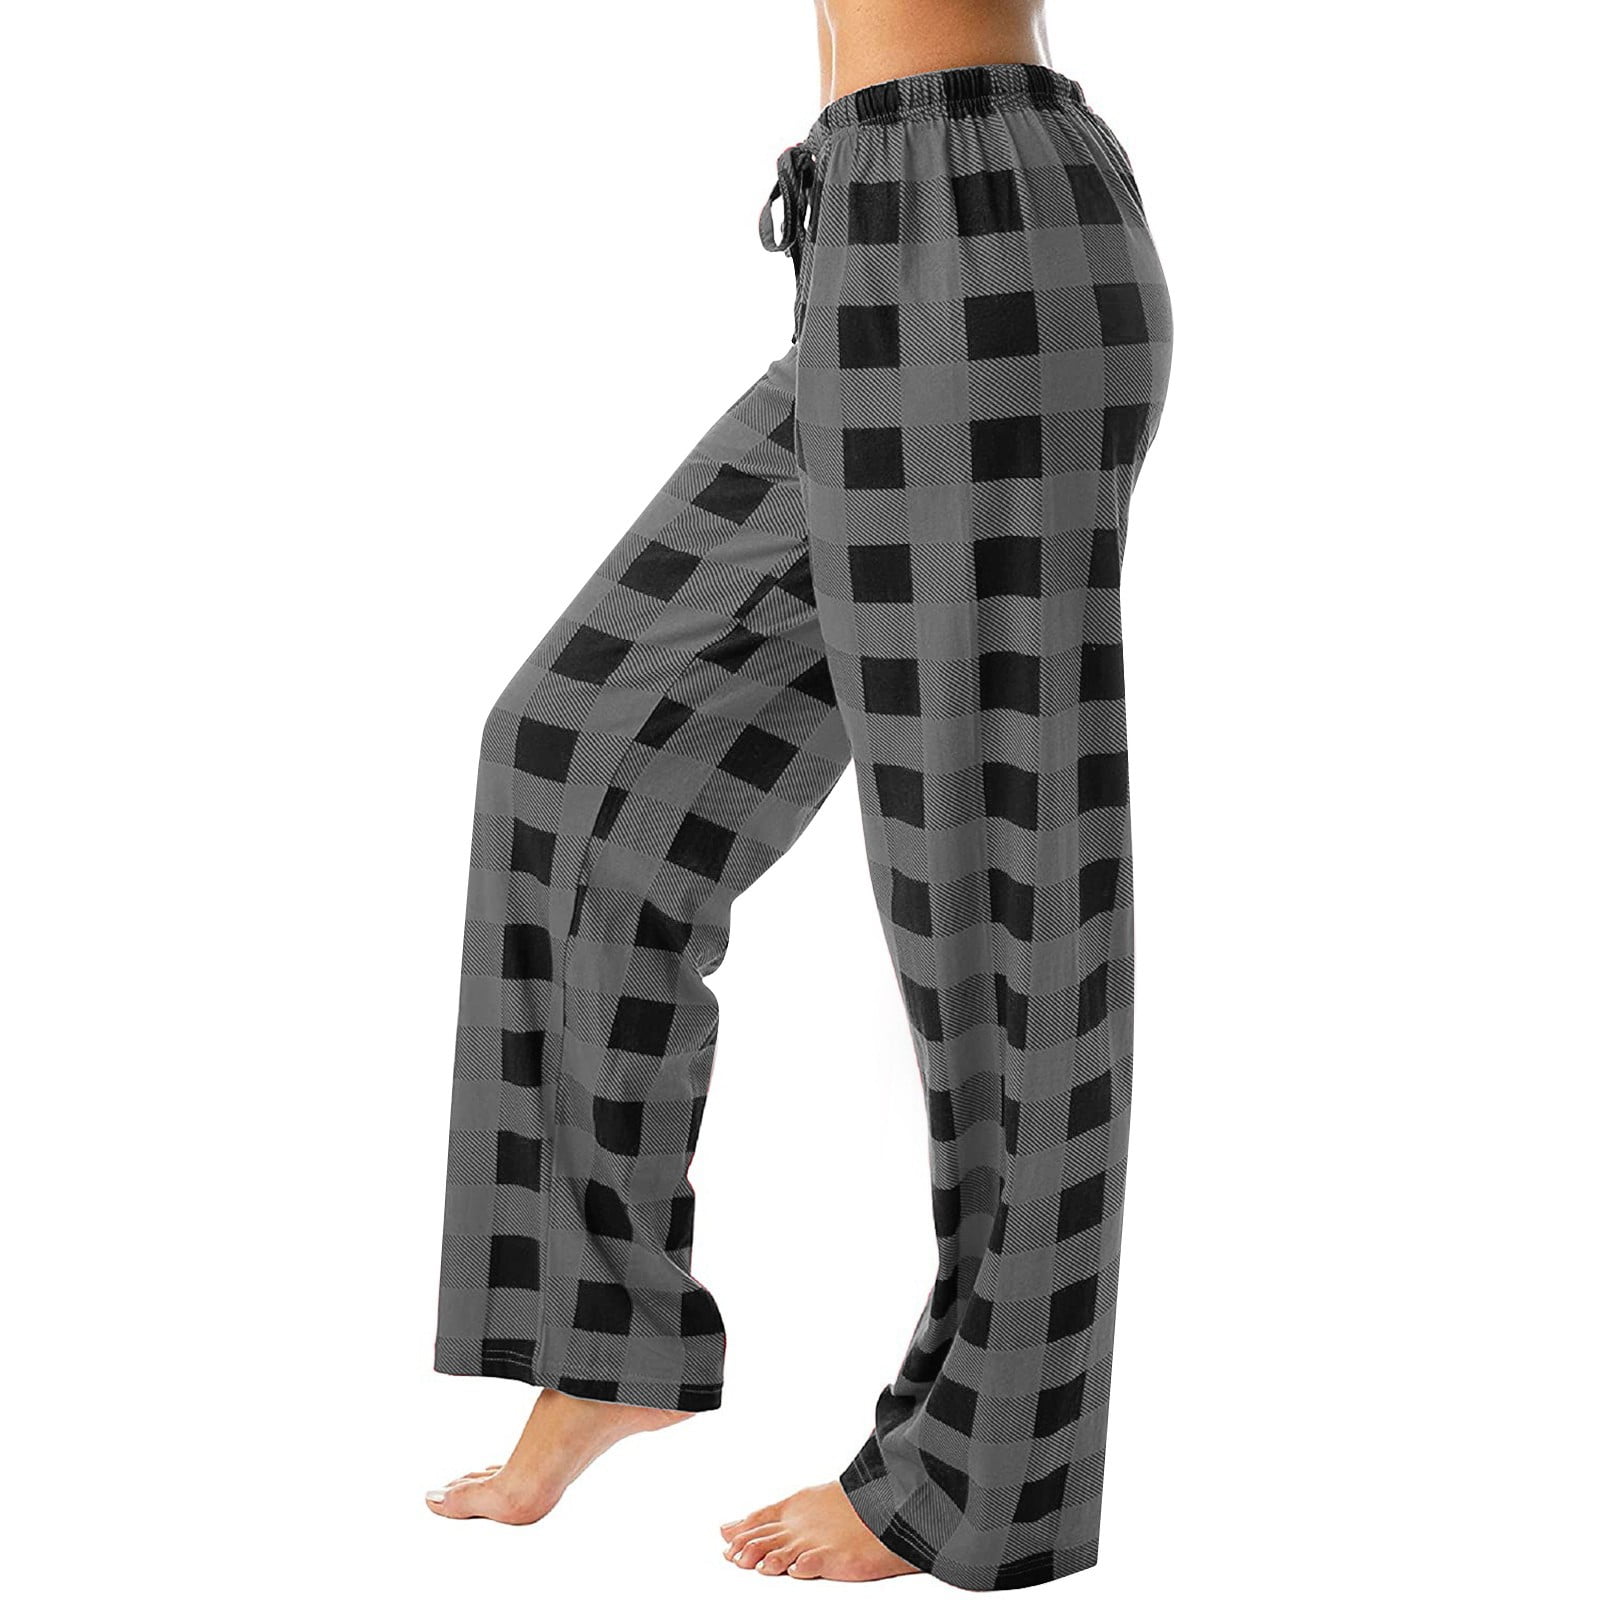 Buffalo Plaid Flannel Pajama Pants for Women with Pockets